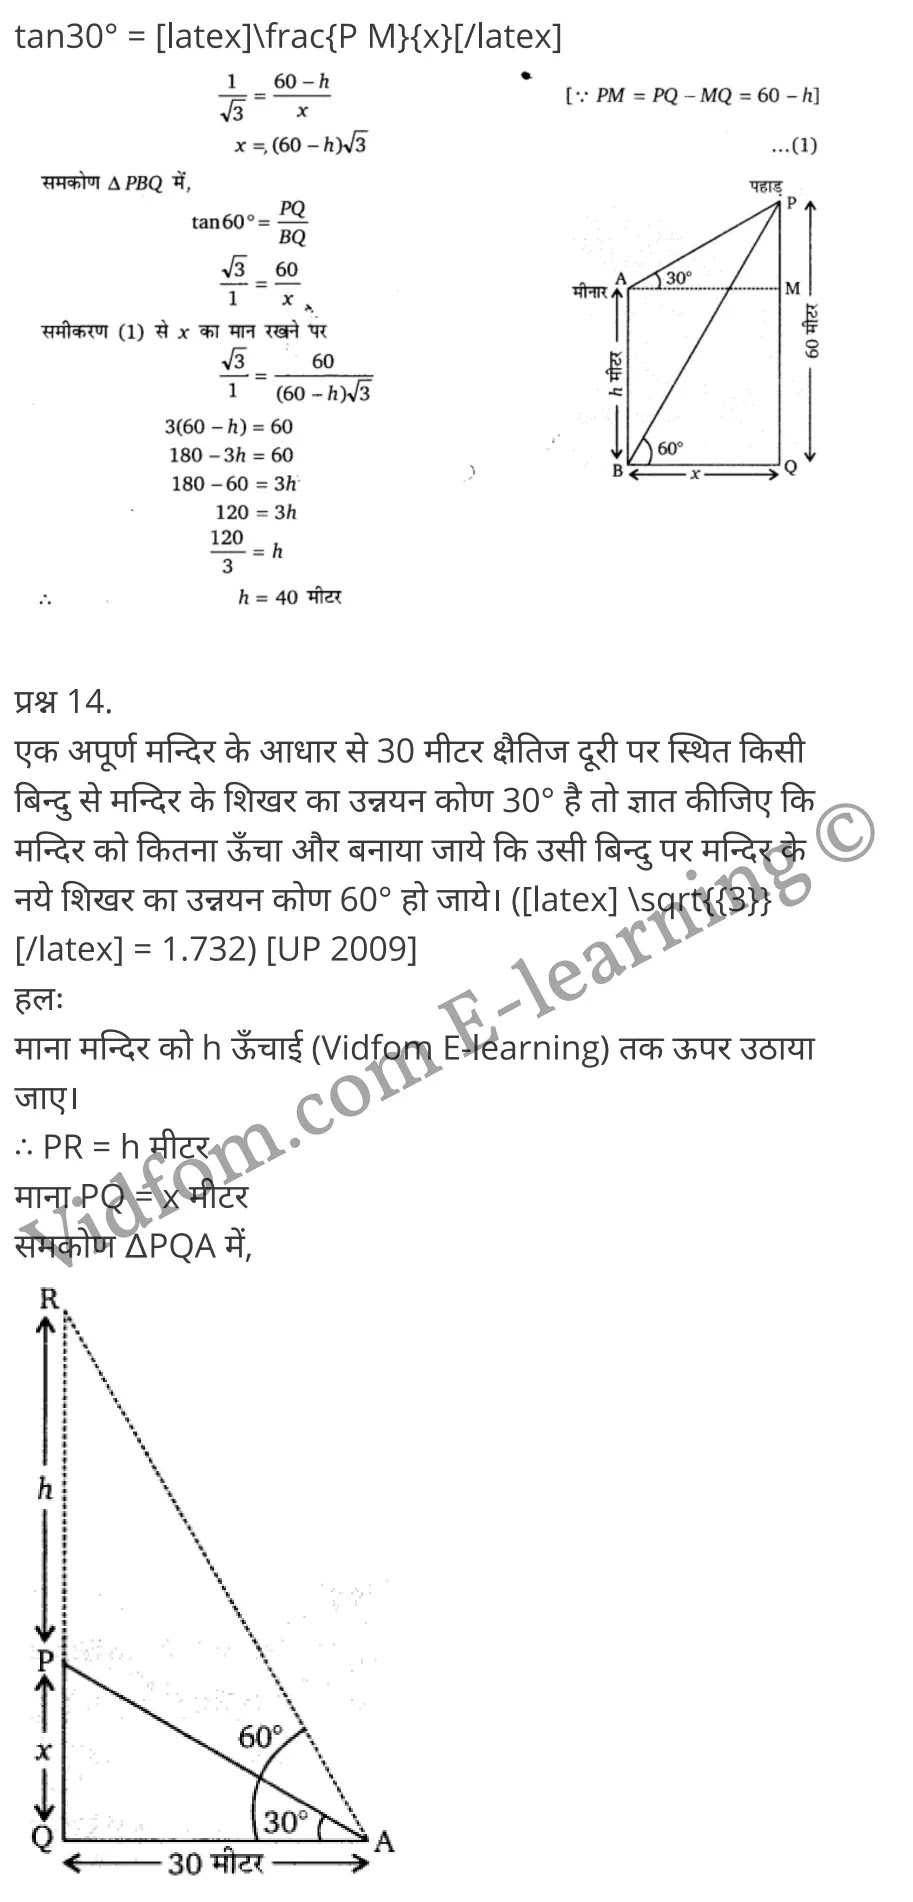 Chapter 11 Height and Distance Ex 11.1, Chapter 11 Height and Distance Ex 11.2, Chapter 11 Height and Distance Ex 11.3, कक्षा 10 बालाजी गणित  के नोट्स  हिंदी में एनसीईआरटी समाधान,     class 10 Balaji Maths Chapter 11,   class 10 Balaji Maths Chapter 11 ncert solutions in Hindi,   class 10 Balaji Maths Chapter 11 notes in hindi,   class 10 Balaji Maths Chapter 11 question answer,   class 10 Balaji Maths Chapter 11 notes,   class 10 Balaji Maths Chapter 11 class 10 Balaji Maths Chapter 11 in  hindi,    class 10 Balaji Maths Chapter 11 important questions in  hindi,   class 10 Balaji Maths Chapter 11 notes in hindi,    class 10 Balaji Maths Chapter 11 test,   class 10 Balaji Maths Chapter 11 pdf,   class 10 Balaji Maths Chapter 11 notes pdf,   class 10 Balaji Maths Chapter 11 exercise solutions,   class 10 Balaji Maths Chapter 11 notes study rankers,   class 10 Balaji Maths Chapter 11 notes,    class 10 Balaji Maths Chapter 11  class 10  notes pdf,   class 10 Balaji Maths Chapter 11 class 10  notes  ncert,   class 10 Balaji Maths Chapter 11 class 10 pdf,   class 10 Balaji Maths Chapter 11  book,   class 10 Balaji Maths Chapter 11 quiz class 10  ,    10  th class 10 Balaji Maths Chapter 11  book up board,   up board 10  th class 10 Balaji Maths Chapter 11 notes,  class 10 Balaji Maths,   class 10 Balaji Maths ncert solutions in Hindi,   class 10 Balaji Maths notes in hindi,   class 10 Balaji Maths question answer,   class 10 Balaji Maths notes,  class 10 Balaji Maths class 10 Balaji Maths Chapter 11 in  hindi,    class 10 Balaji Maths important questions in  hindi,   class 10 Balaji Maths notes in hindi,    class 10 Balaji Maths test,  class 10 Balaji Maths class 10 Balaji Maths Chapter 11 pdf,   class 10 Balaji Maths notes pdf,   class 10 Balaji Maths exercise solutions,   class 10 Balaji Maths,  class 10 Balaji Maths notes study rankers,   class 10 Balaji Maths notes,  class 10 Balaji Maths notes,   class 10 Balaji Maths  class 10  notes pdf,   class 10 Balaji Maths class 10  notes  ncert,   class 10 Balaji Maths class 10 pdf,   class 10 Balaji Maths  book,  class 10 Balaji Maths quiz class 10  ,  10  th class 10 Balaji Maths    book up board,    up board 10  th class 10 Balaji Maths notes,      कक्षा 10 बालाजी गणित अध्याय 11 ,  कक्षा 10 बालाजी गणित, कक्षा 10 बालाजी गणित अध्याय 11  के नोट्स हिंदी में,  कक्षा 10 का हिंदी अध्याय 11 का प्रश्न उत्तर,  कक्षा 10 बालाजी गणित अध्याय 11  के नोट्स,  10 कक्षा बालाजी गणित  हिंदी में, कक्षा 10 बालाजी गणित अध्याय 11  हिंदी में,  कक्षा 10 बालाजी गणित अध्याय 11  महत्वपूर्ण प्रश्न हिंदी में, कक्षा 10   हिंदी के नोट्स  हिंदी में, बालाजी गणित हिंदी में  कक्षा 10 नोट्स pdf,    बालाजी गणित हिंदी में  कक्षा 10 नोट्स 2021 ncert,   बालाजी गणित हिंदी  कक्षा 10 pdf,   बालाजी गणित हिंदी में  पुस्तक,   बालाजी गणित हिंदी में की बुक,   बालाजी गणित हिंदी में  प्रश्नोत्तरी class 10 ,  बिहार बोर्ड 10  पुस्तक वीं हिंदी नोट्स,    बालाजी गणित कक्षा 10 नोट्स 2021 ncert,   बालाजी गणित  कक्षा 10 pdf,   बालाजी गणित  पुस्तक,   बालाजी गणित  प्रश्नोत्तरी class 10, कक्षा 10 बालाजी गणित,  कक्षा 10 बालाजी गणित  के नोट्स हिंदी में,  कक्षा 10 का हिंदी का प्रश्न उत्तर,  कक्षा 10 बालाजी गणित  के नोट्स,  10 कक्षा हिंदी 2021  हिंदी में, कक्षा 10 बालाजी गणित  हिंदी में,  कक्षा 10 बालाजी गणित  महत्वपूर्ण प्रश्न हिंदी में, कक्षा 10 बालाजी गणित  नोट्स  हिंदी में,